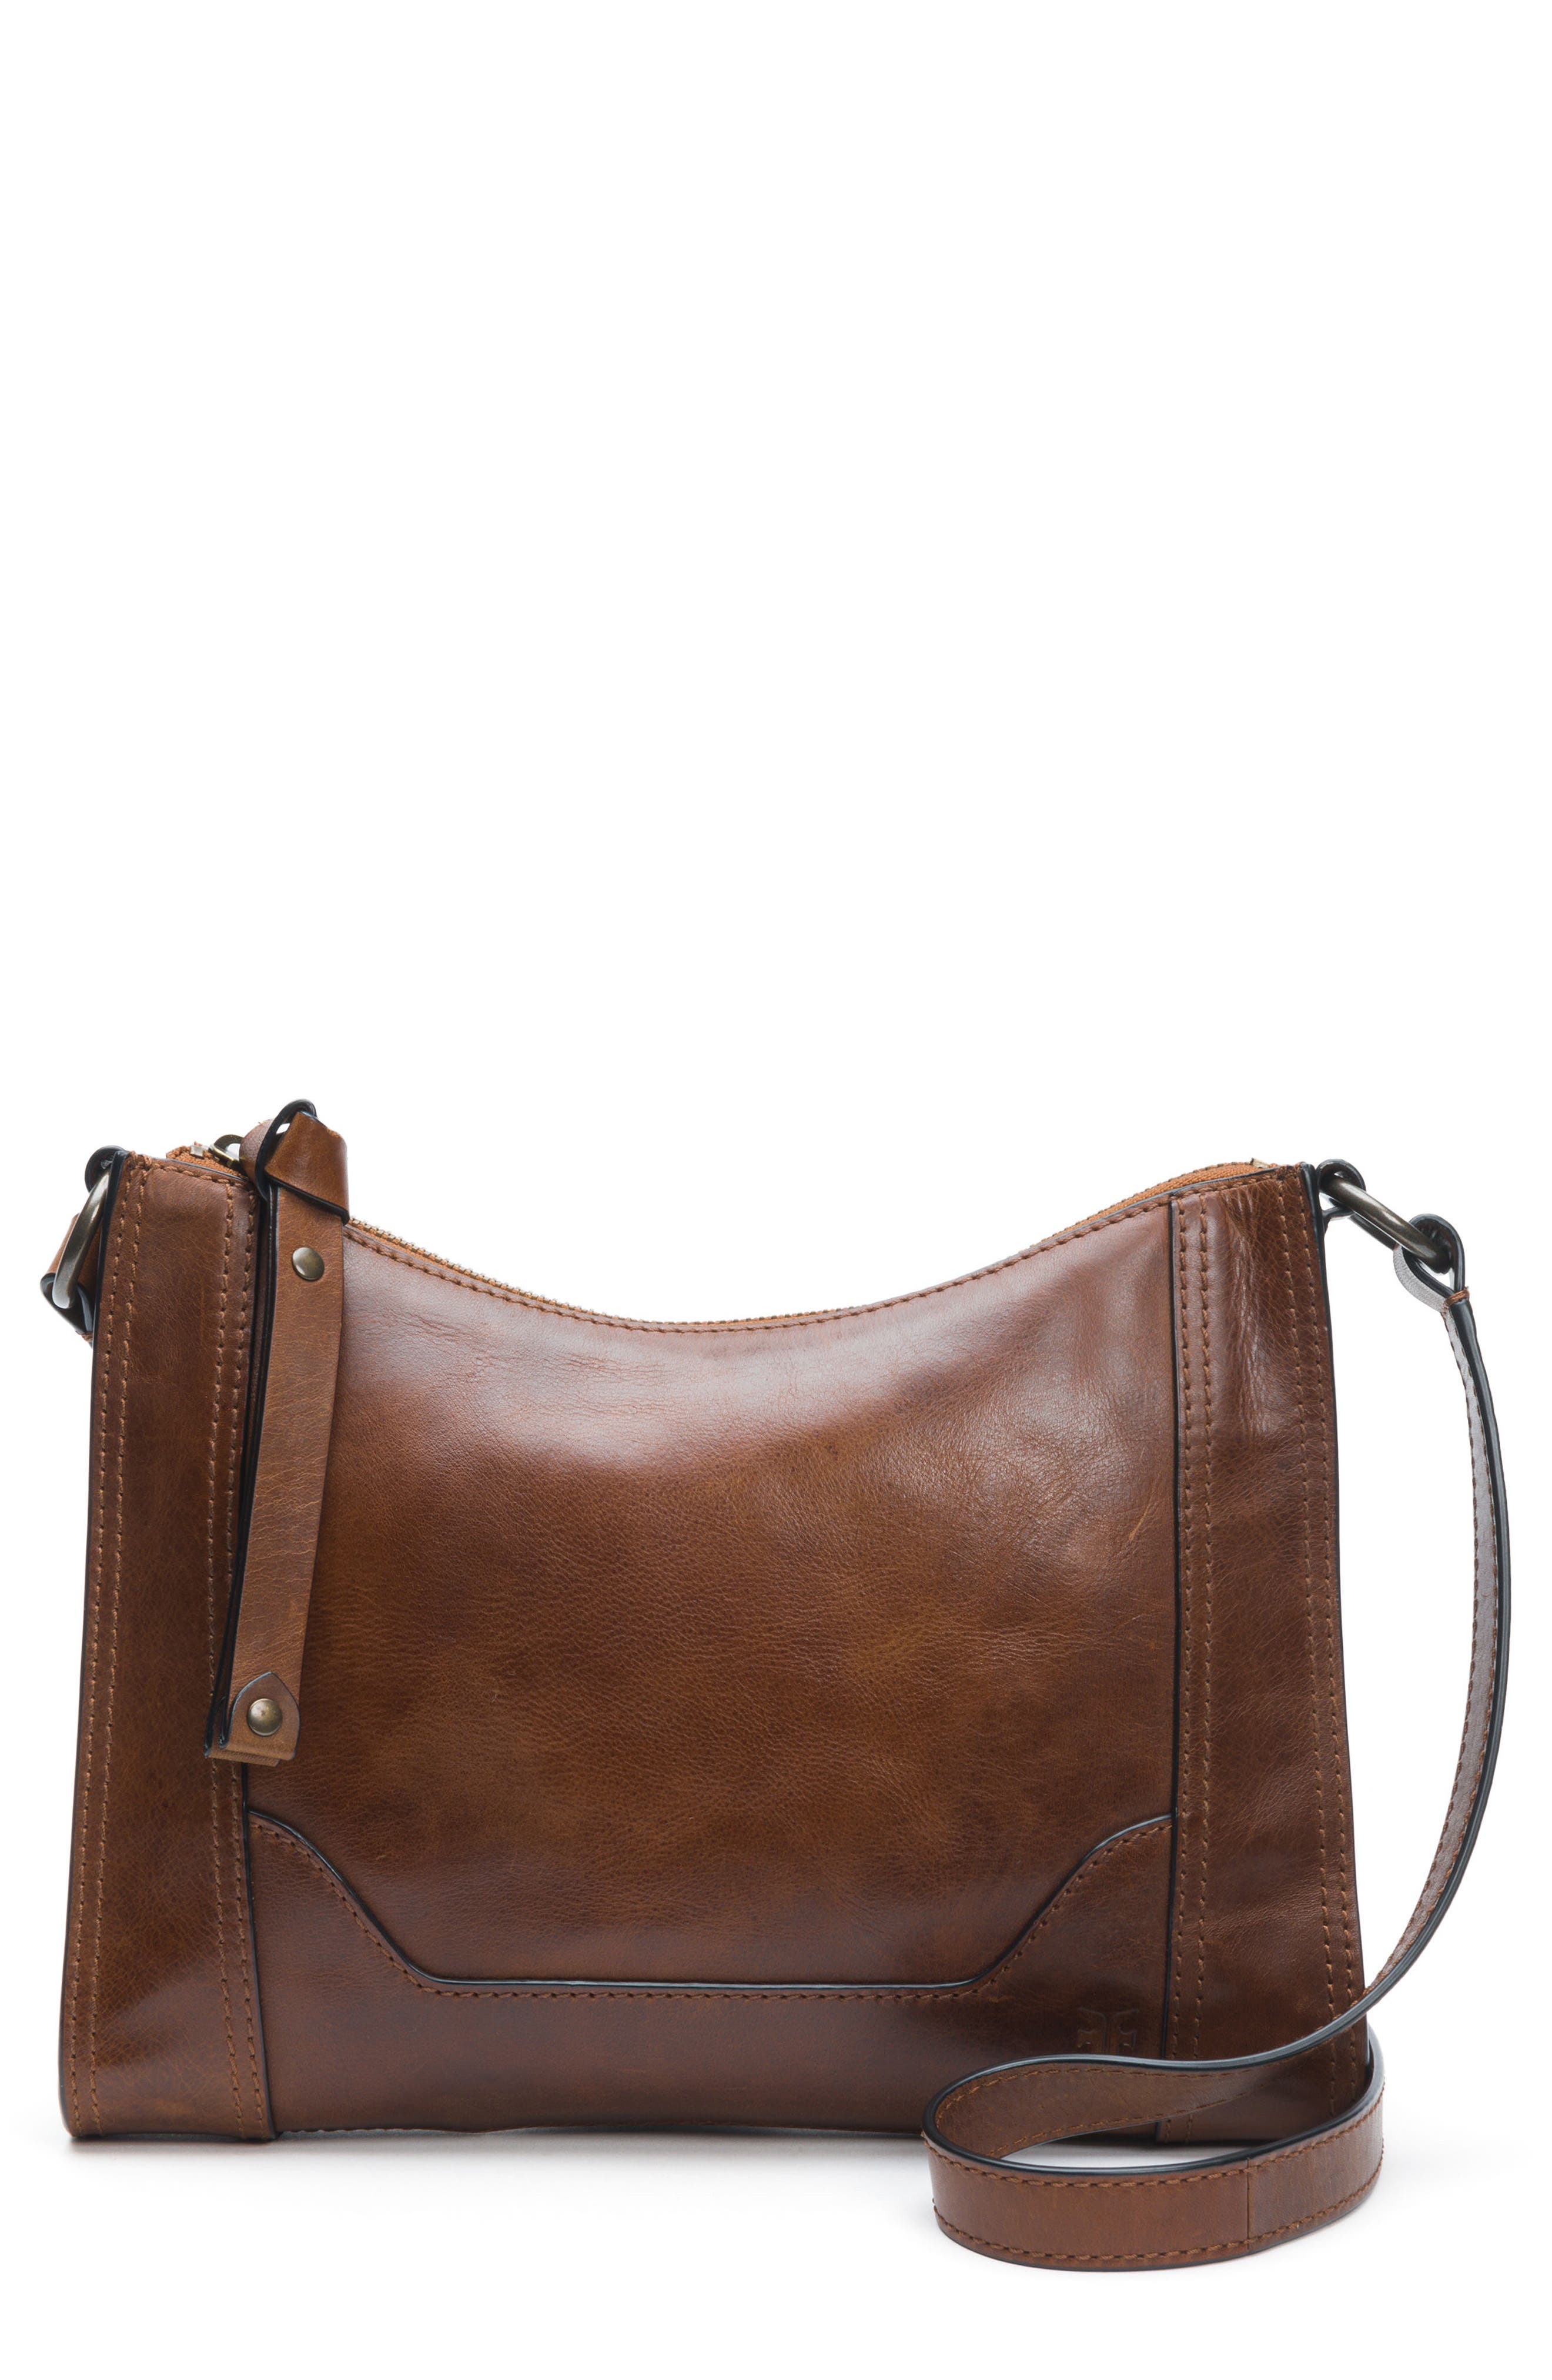 Women Lady Crossbody Leather Shoulder Bag Tote Purse Handbag Messenger Satchel Z